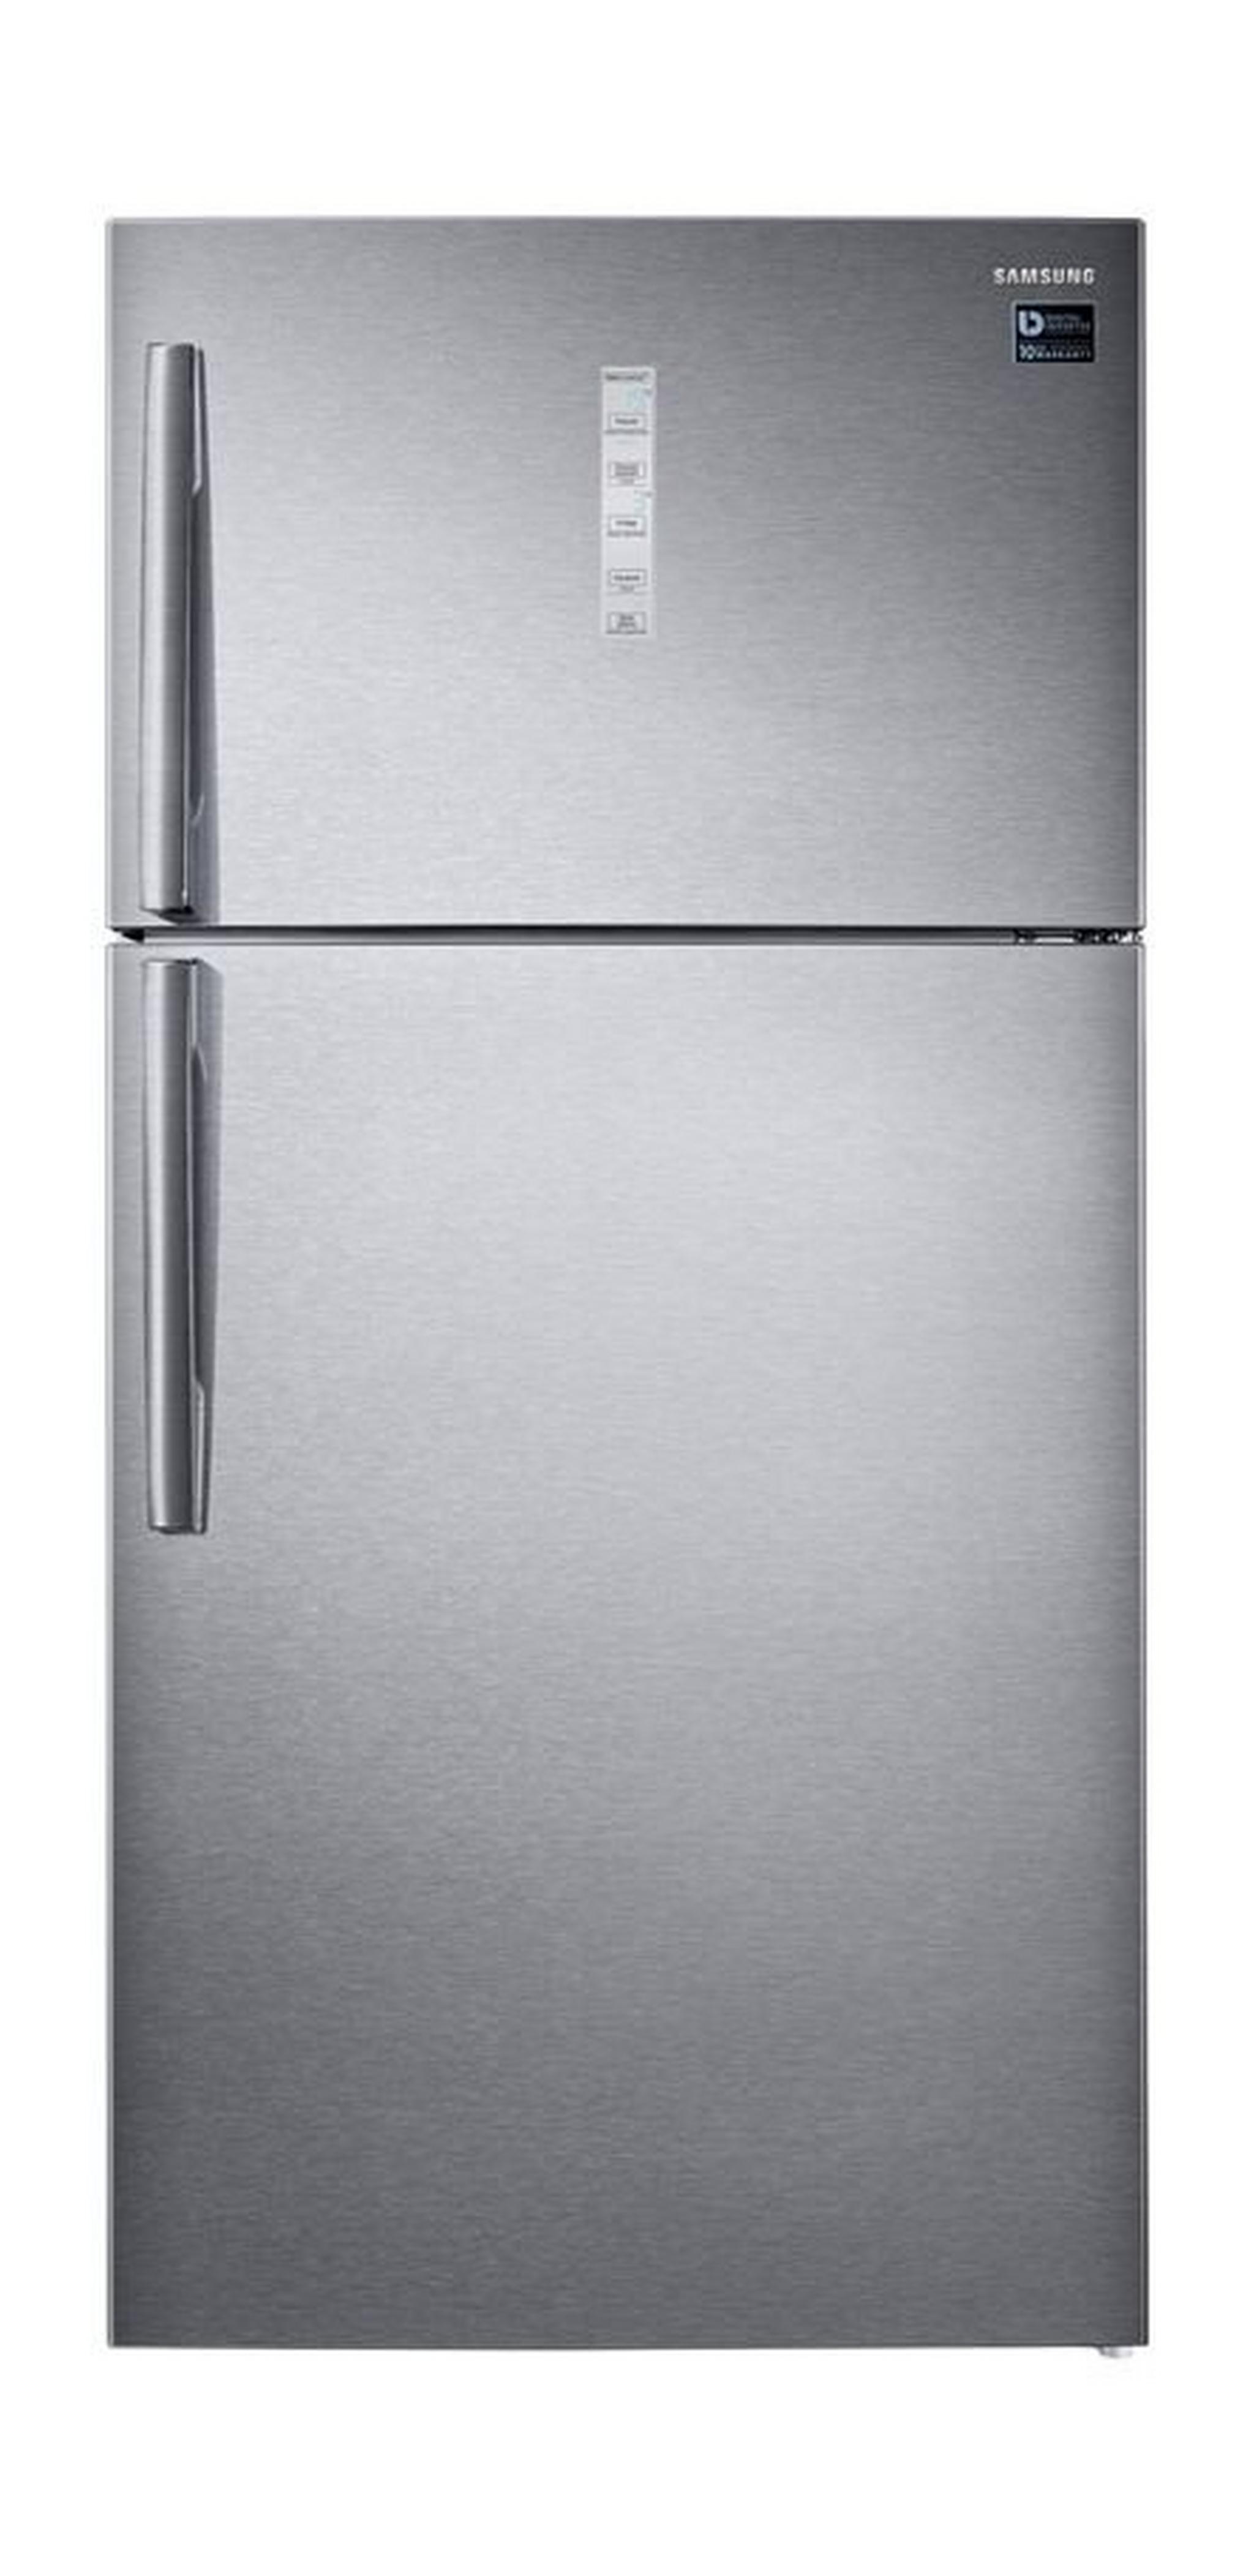 Samsung Top Mount Refrigerator, 29CFT, 810-Liters, RT81K7050SL - Silver